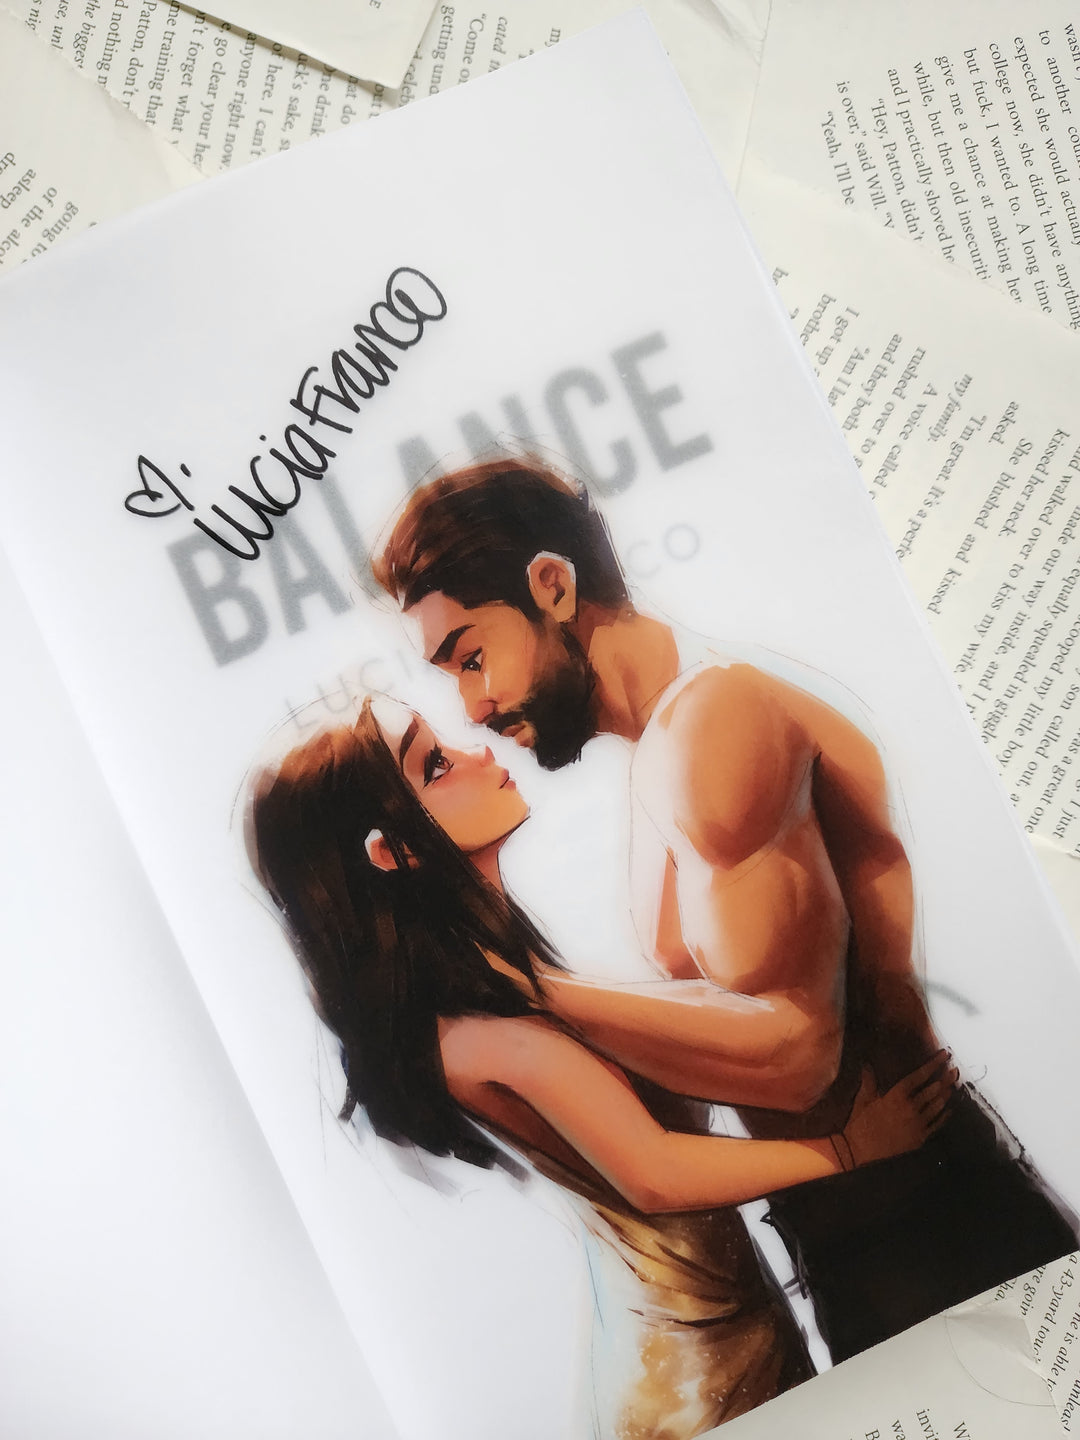 Lucia Franco - Off Balance  Book Club Edition Novel Notes™ - Digitally Signed Overlay Print